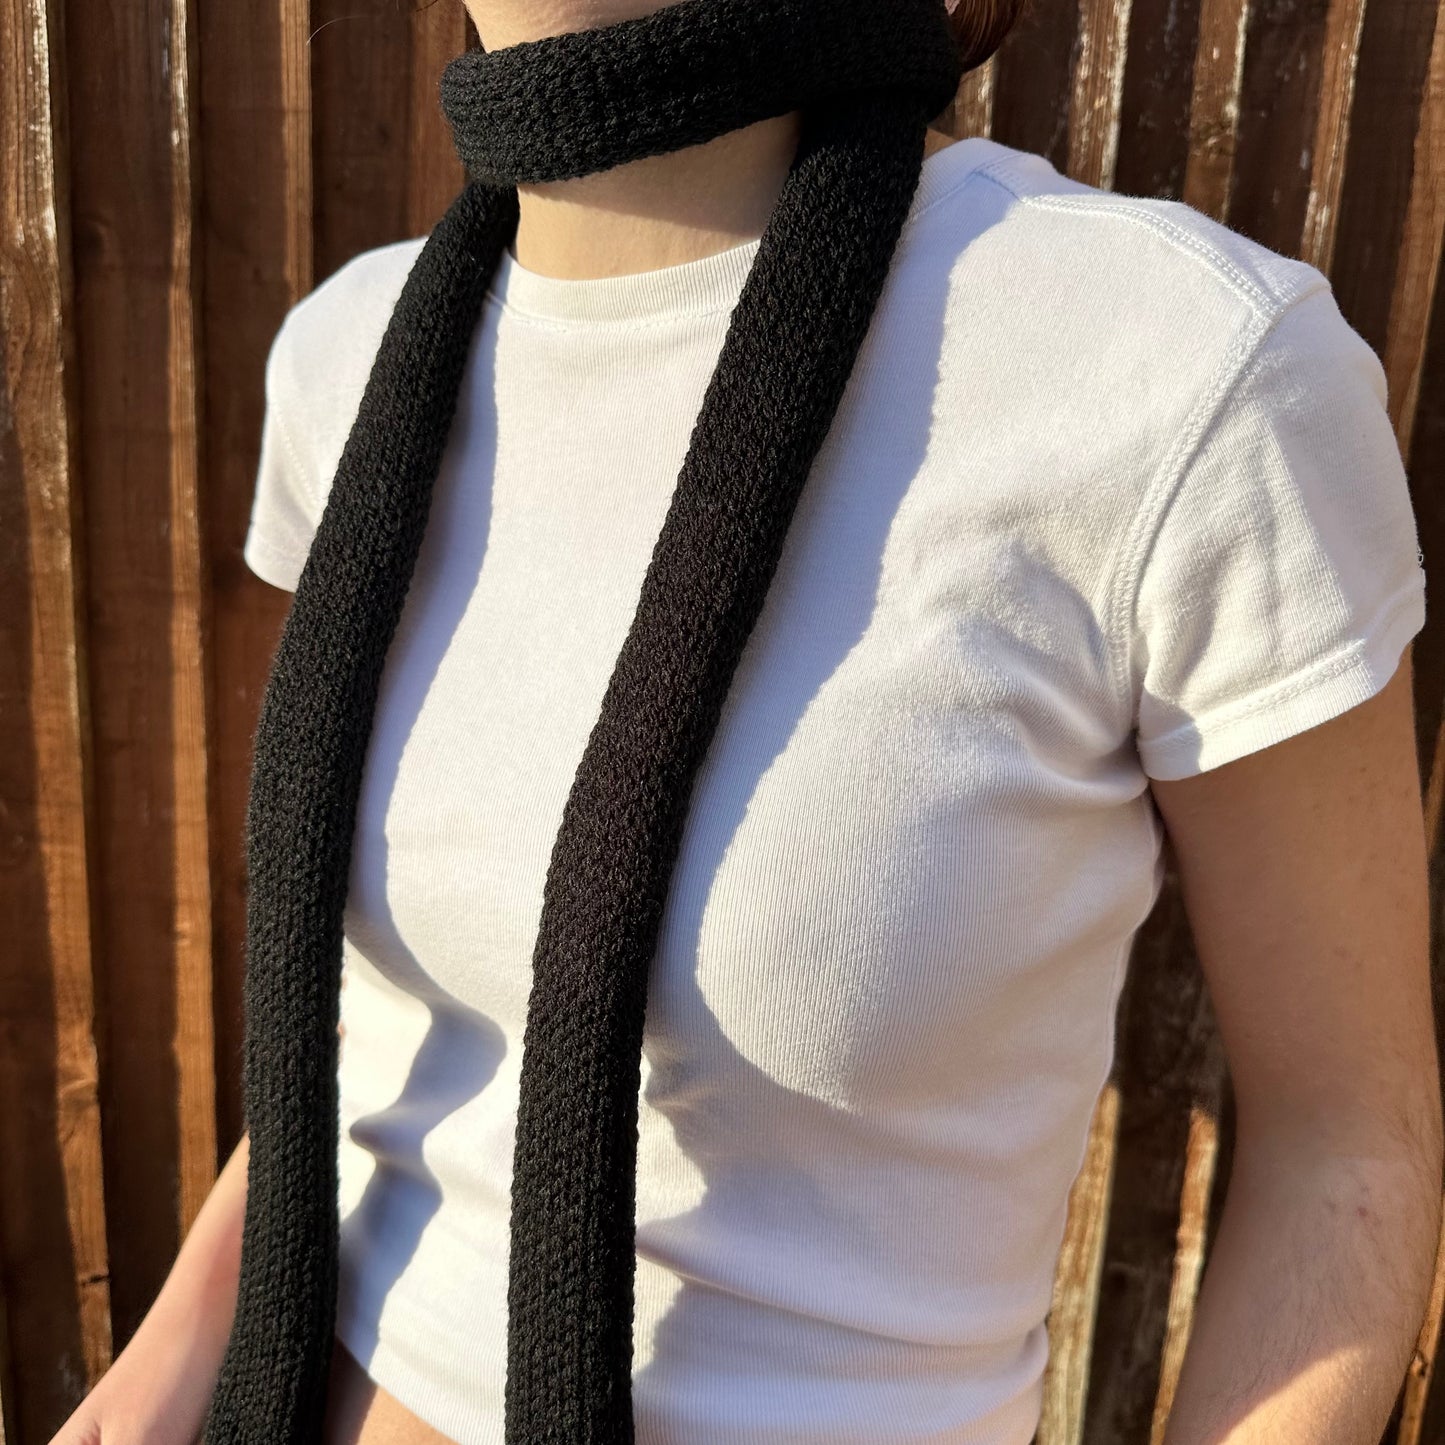 Handmade knitted skinny scarf in black